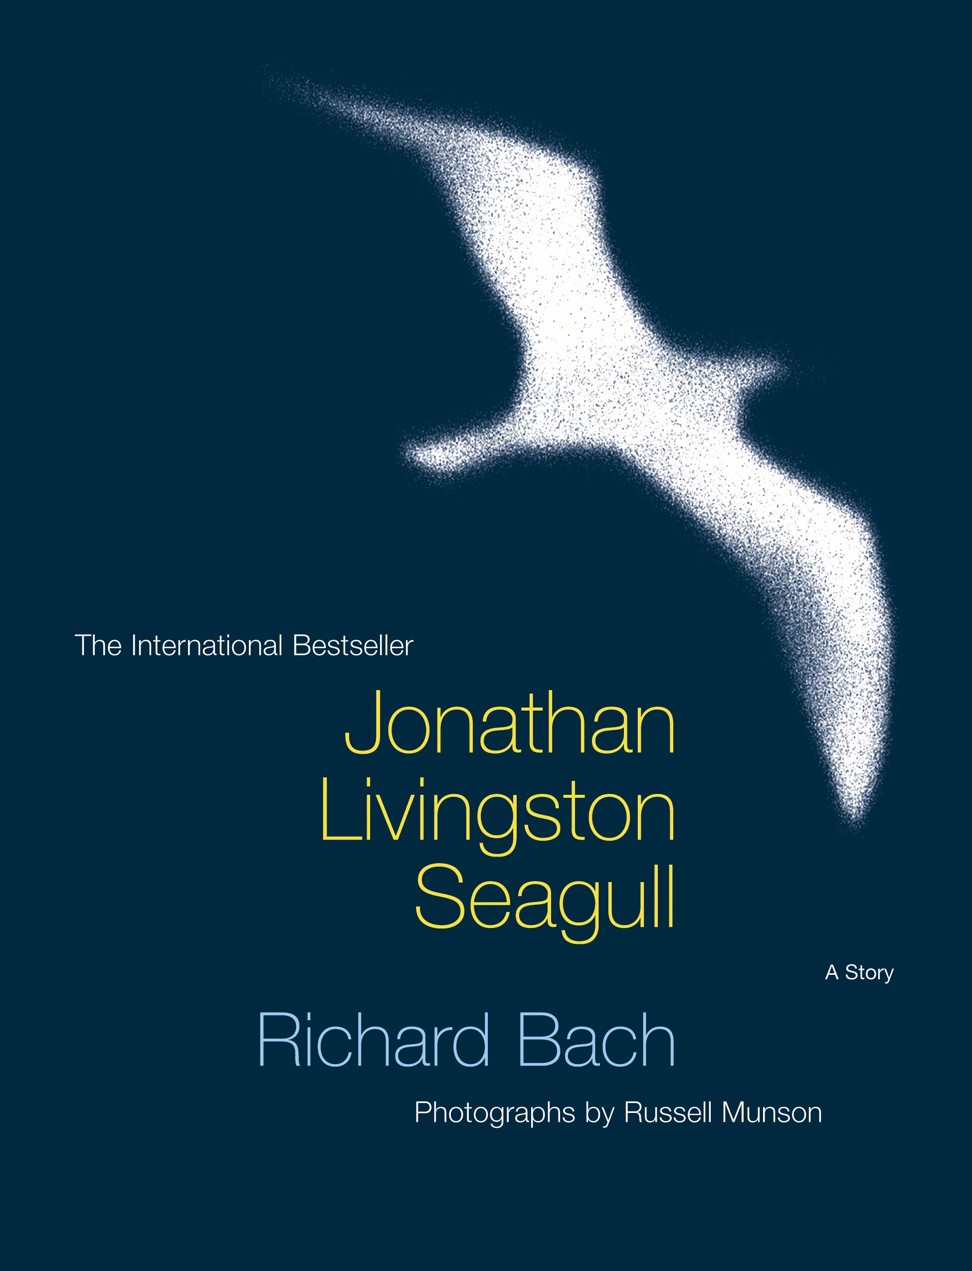 Jonathan Livingston Seagull by Richard Bach.